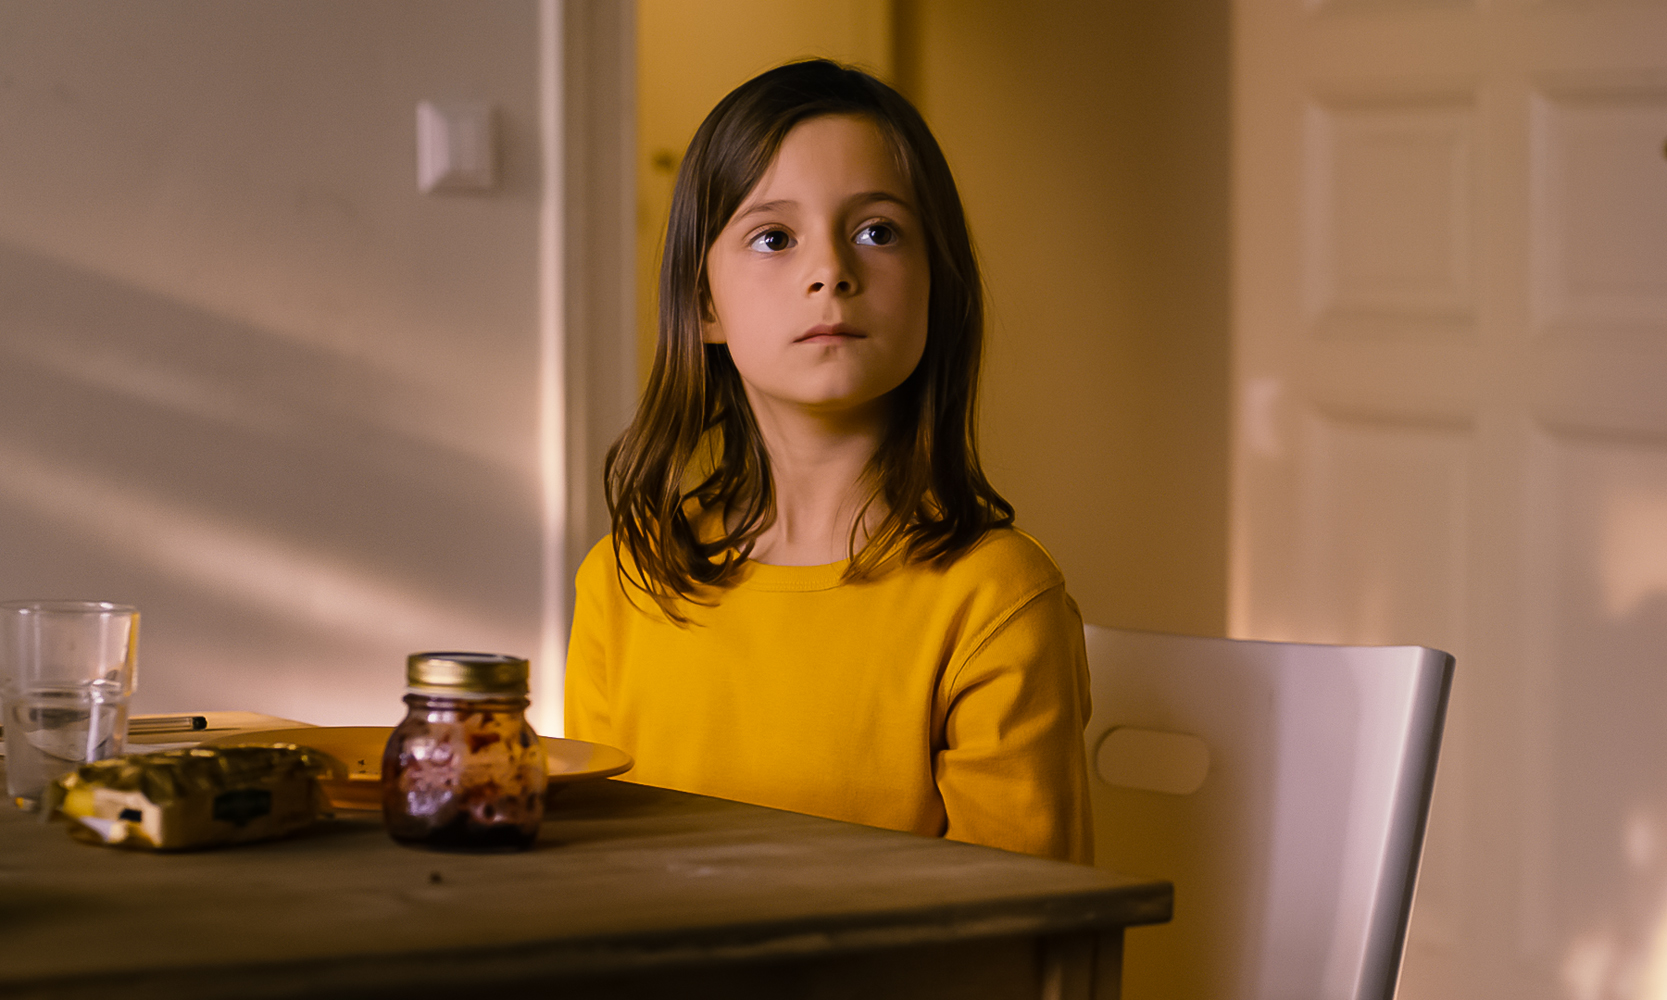 Mia Kasalo as Clara, who hates the coffee grinder.